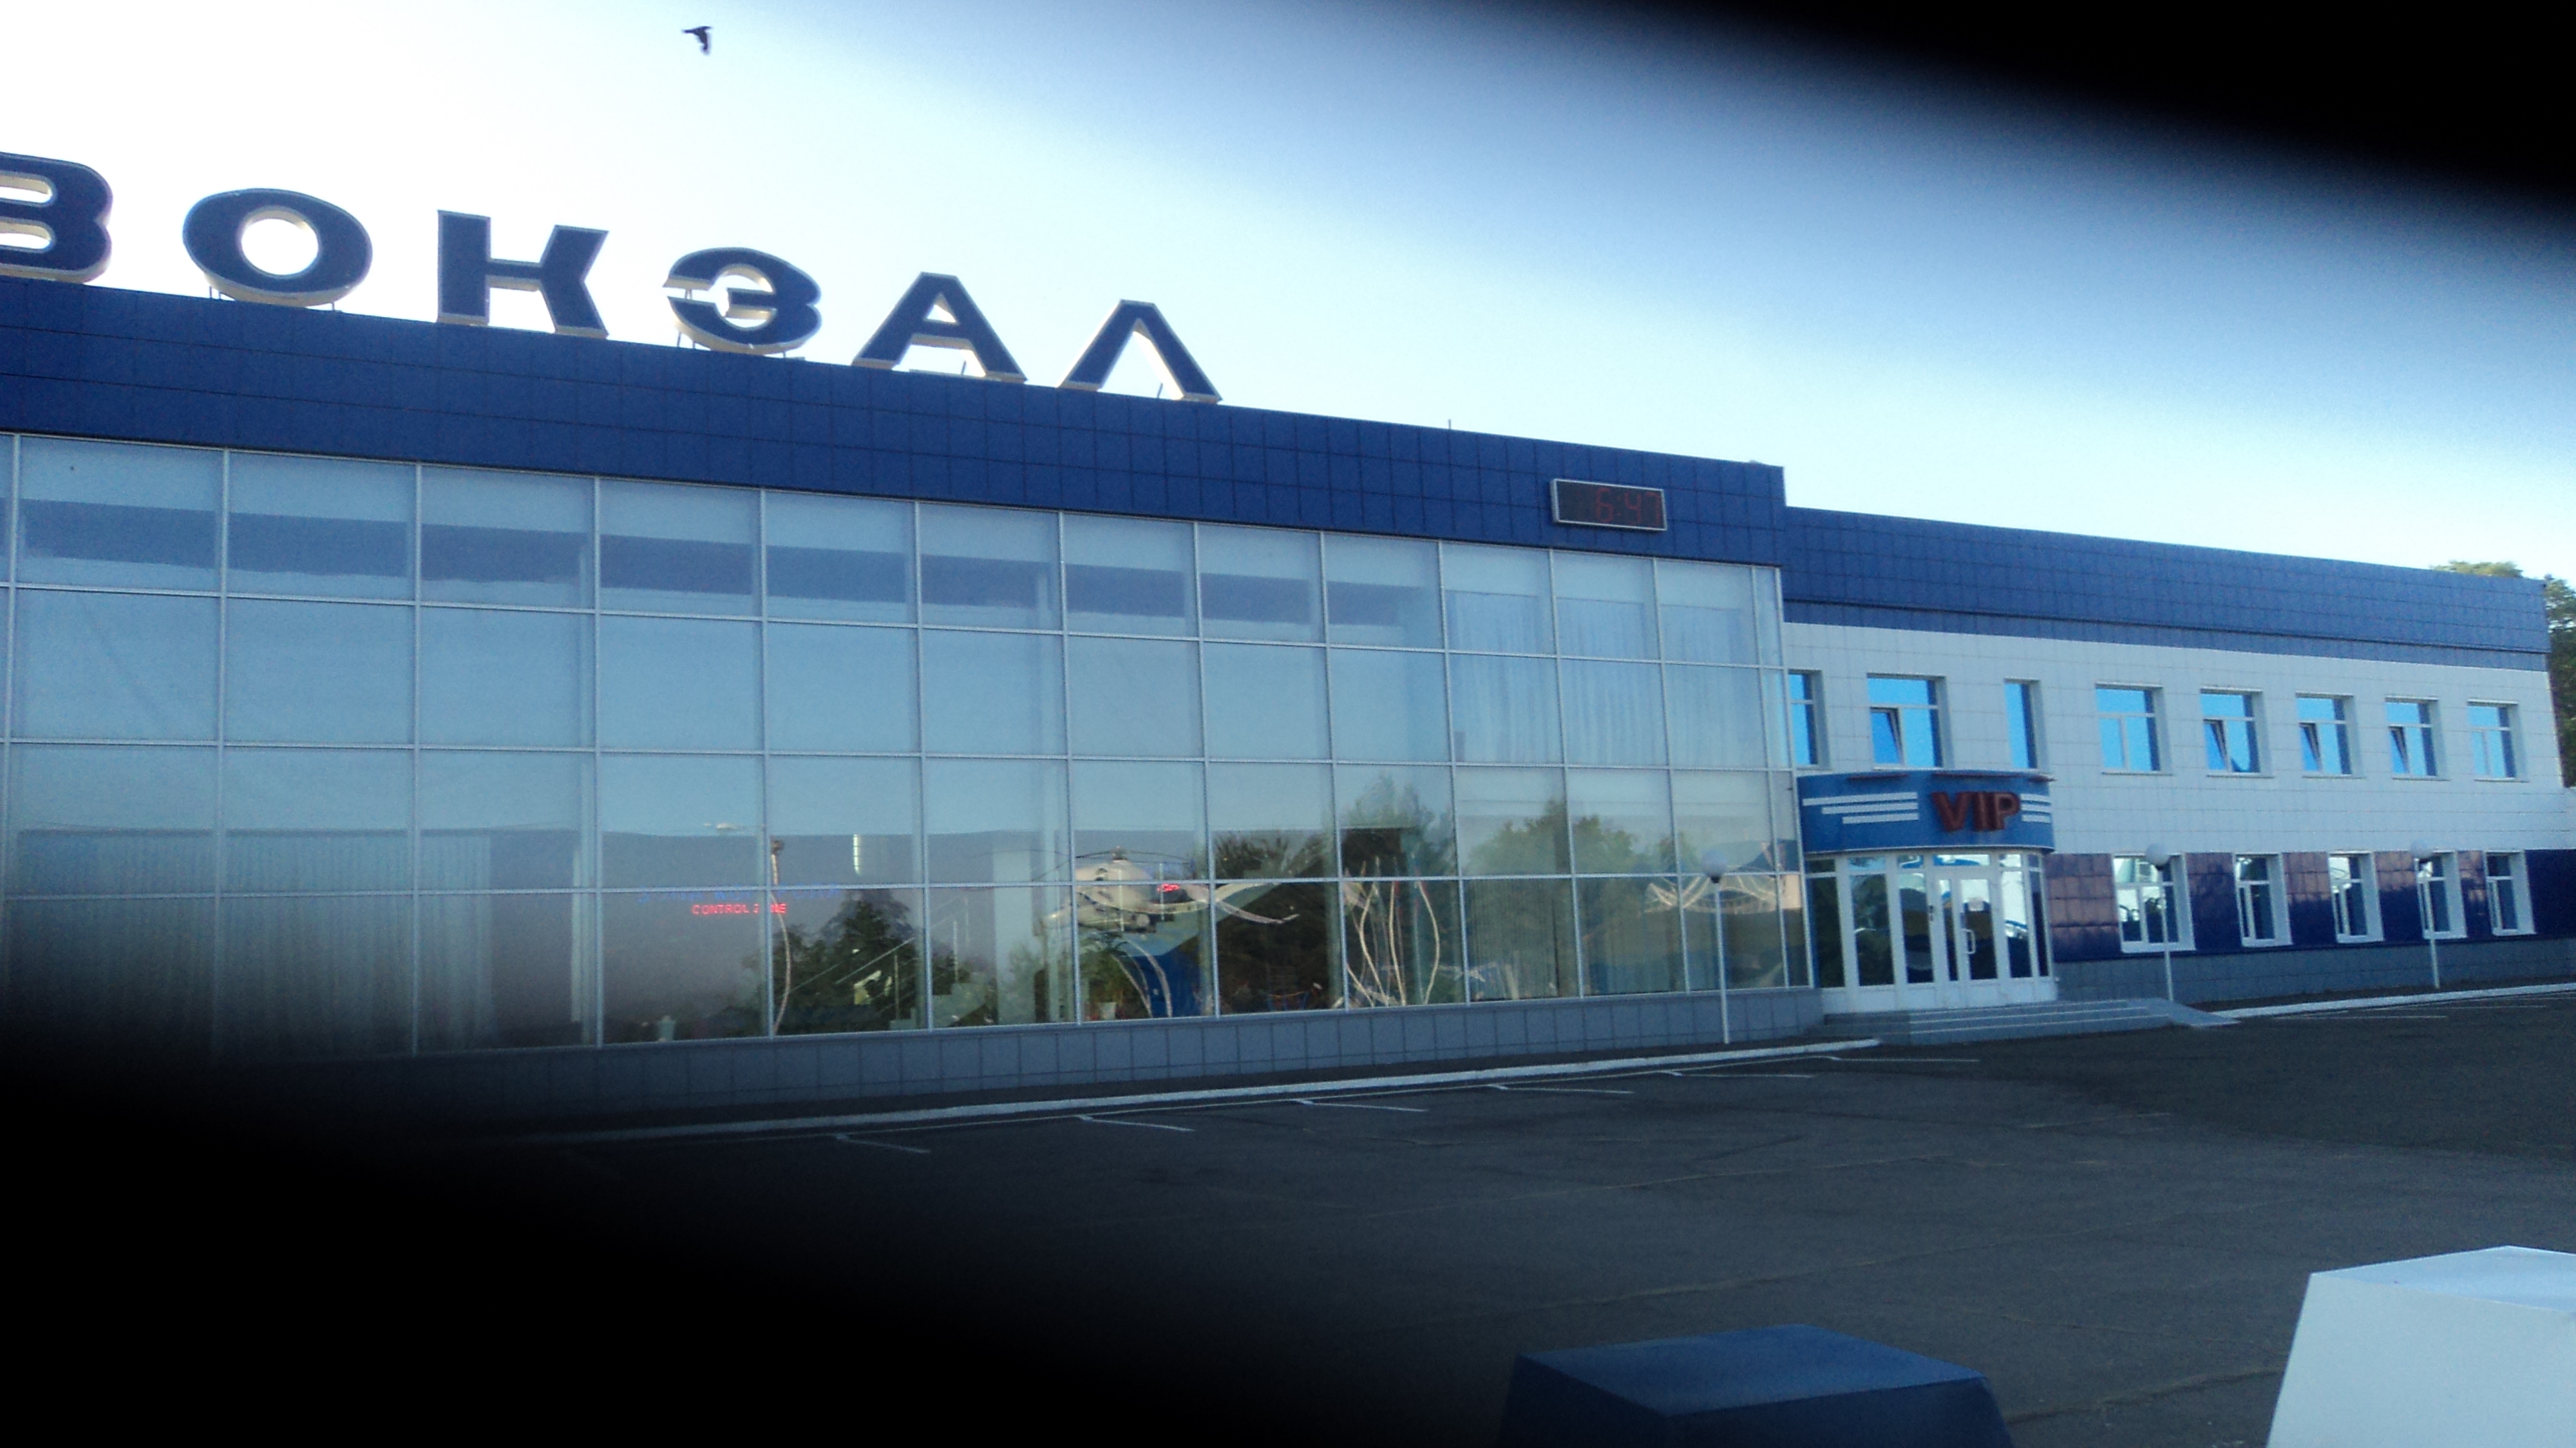 Фото новокузнецкого аэропорта